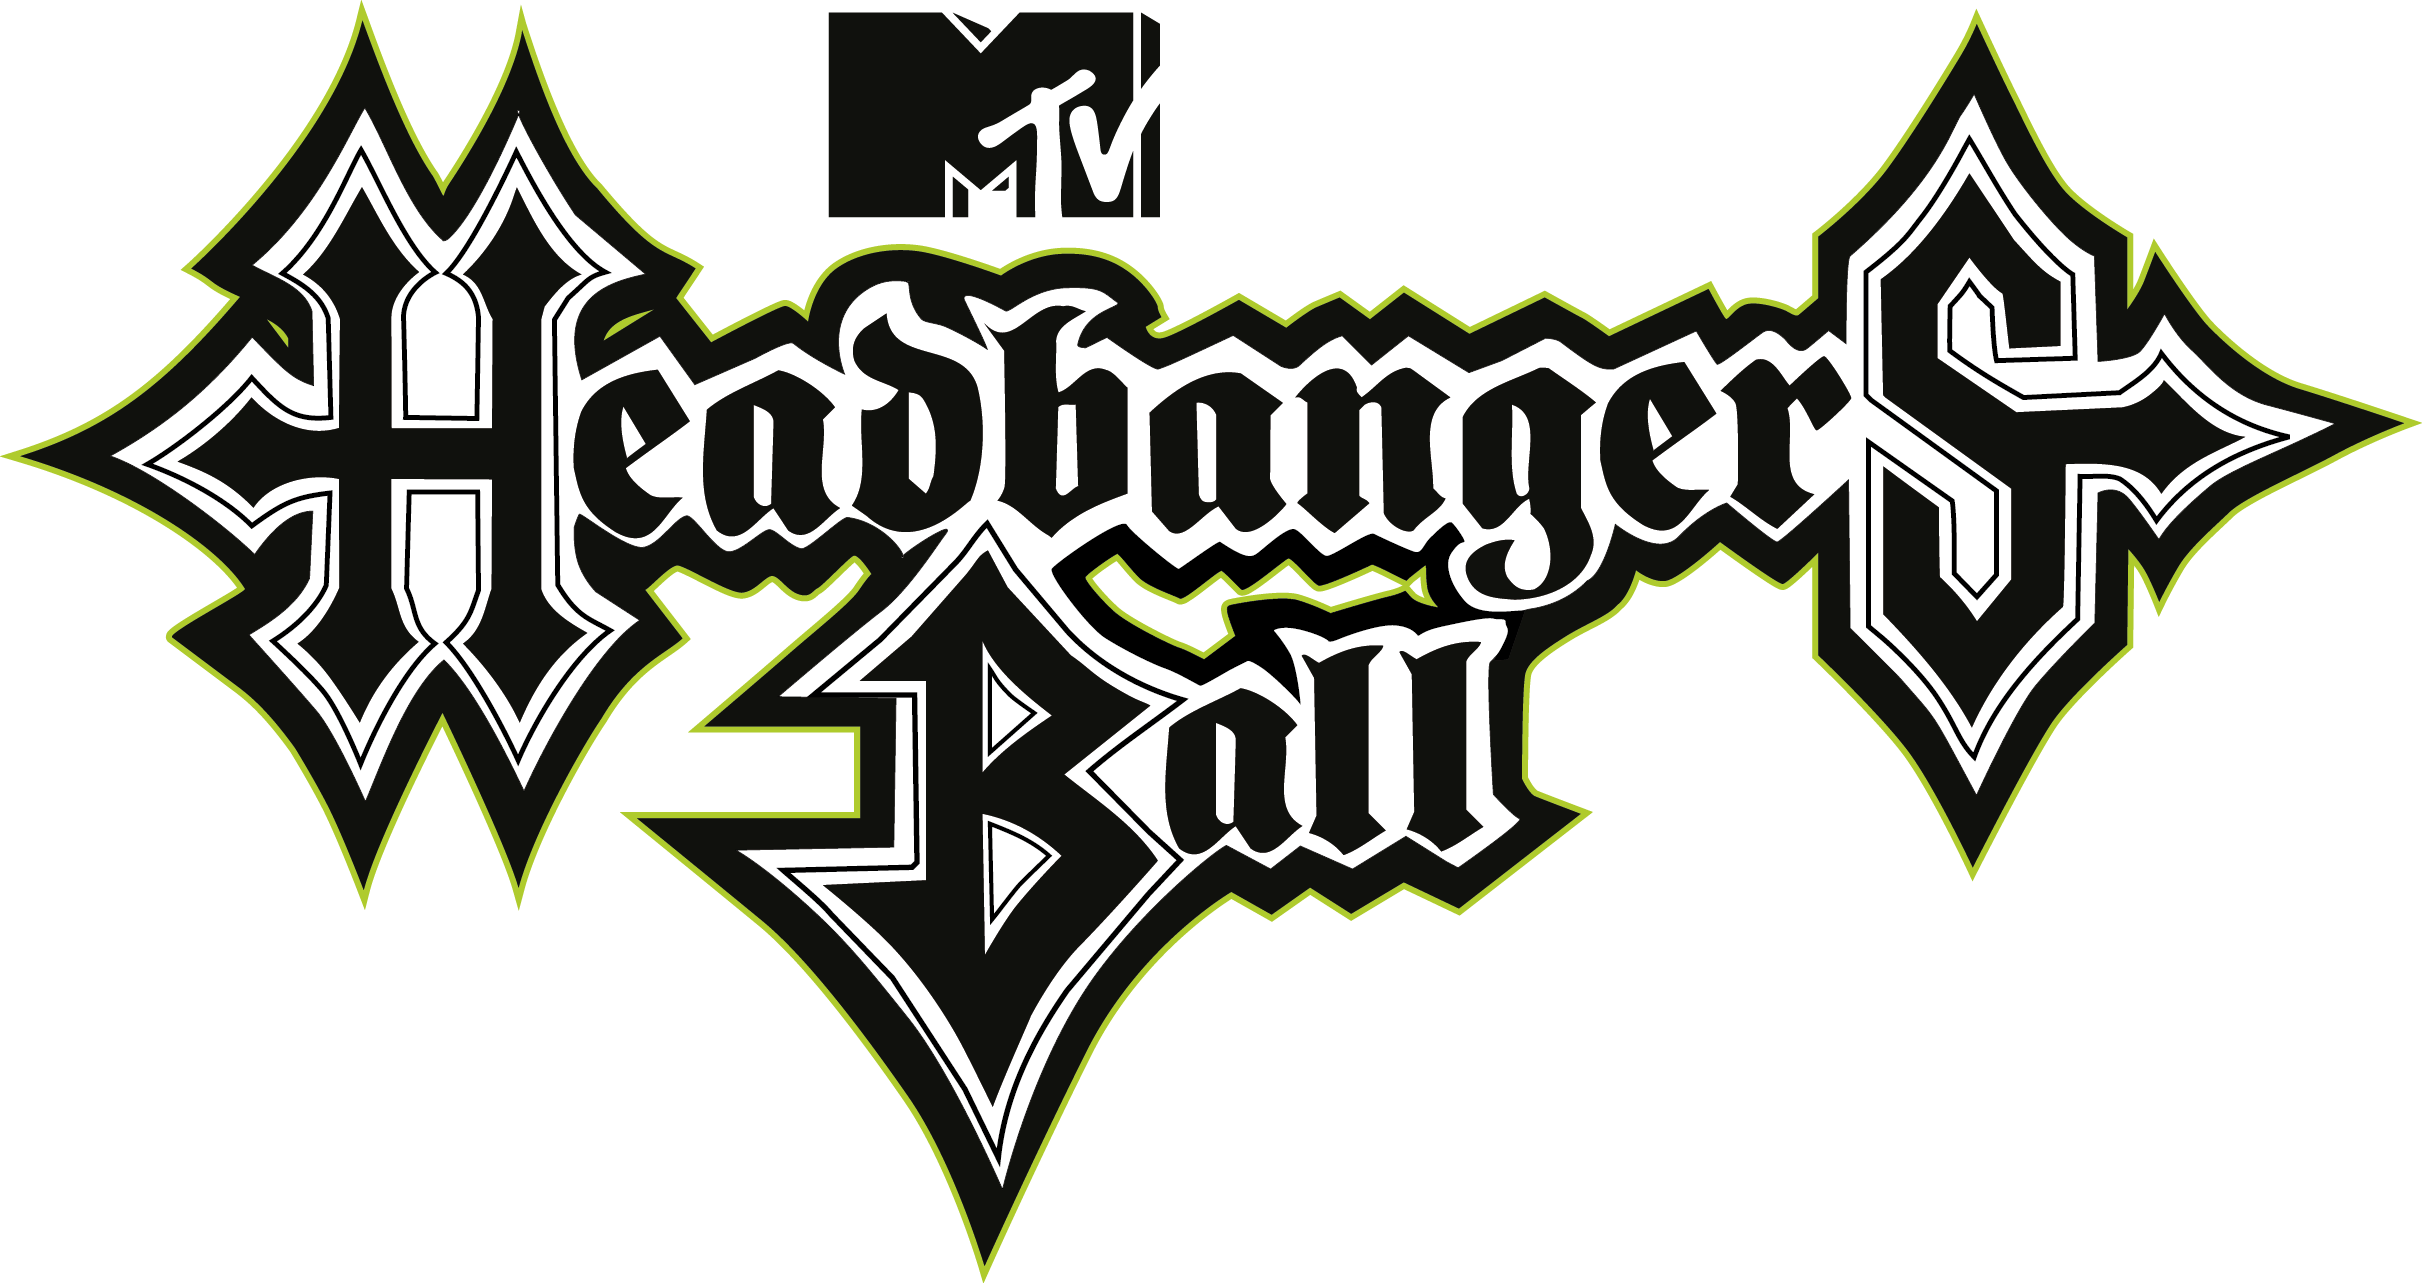 MTV HEADBANGERS BALL Logo